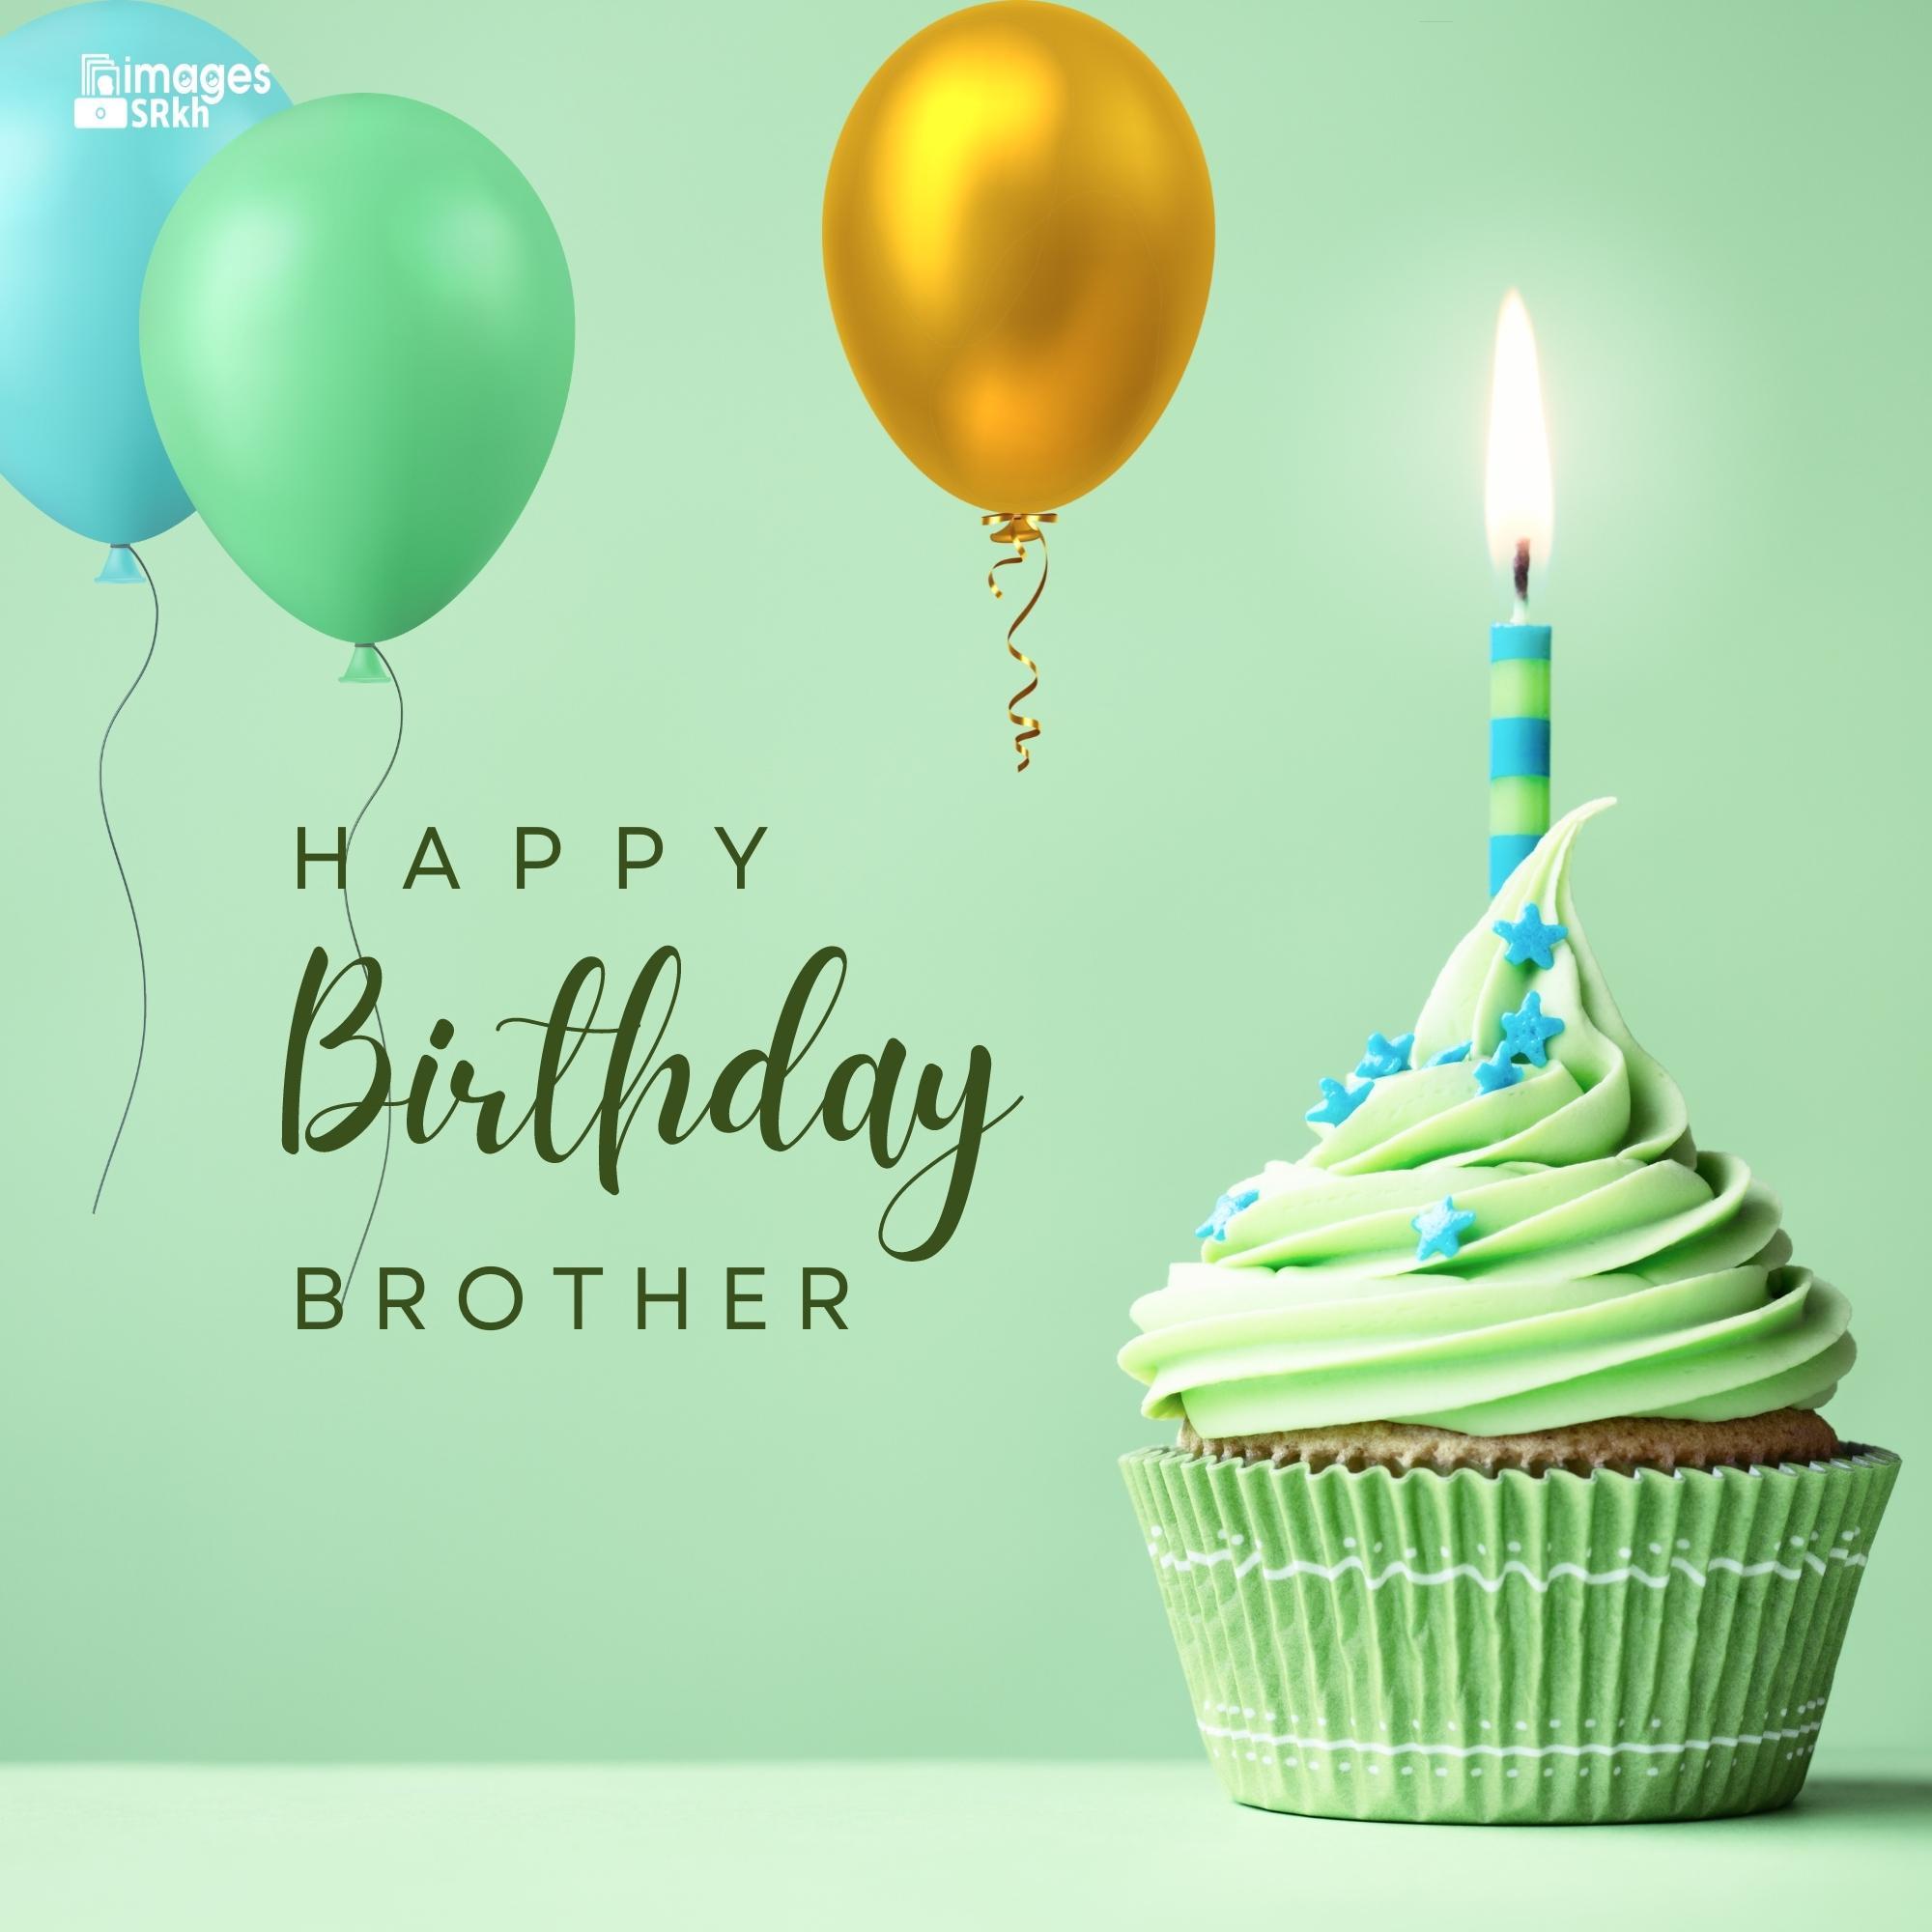 Ð brother happy birthday download free